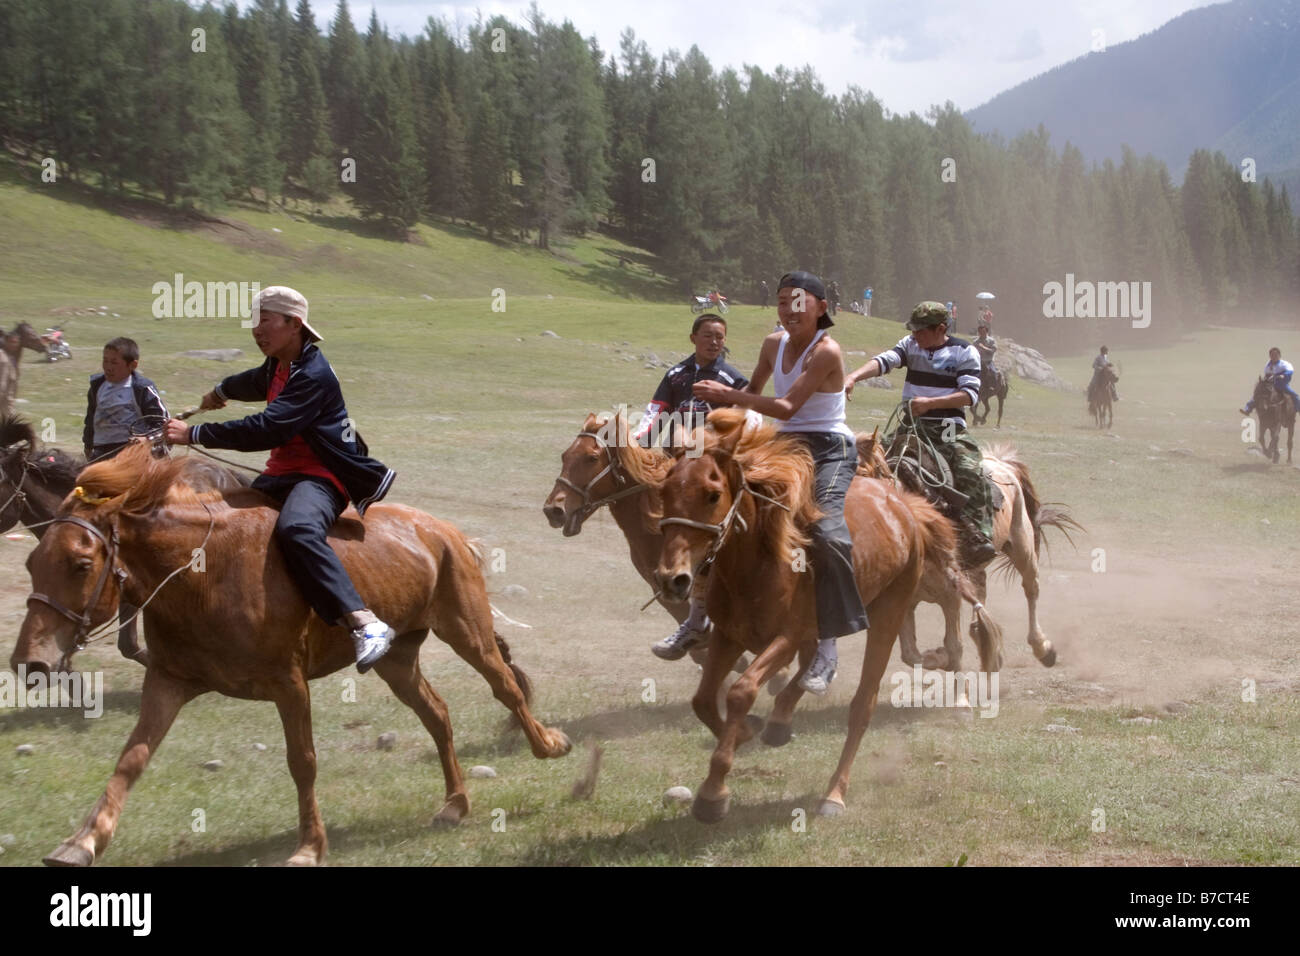 Carreras de caballos mongoles durante la competencia anual denominada Ao Bao Jie. Foto de stock